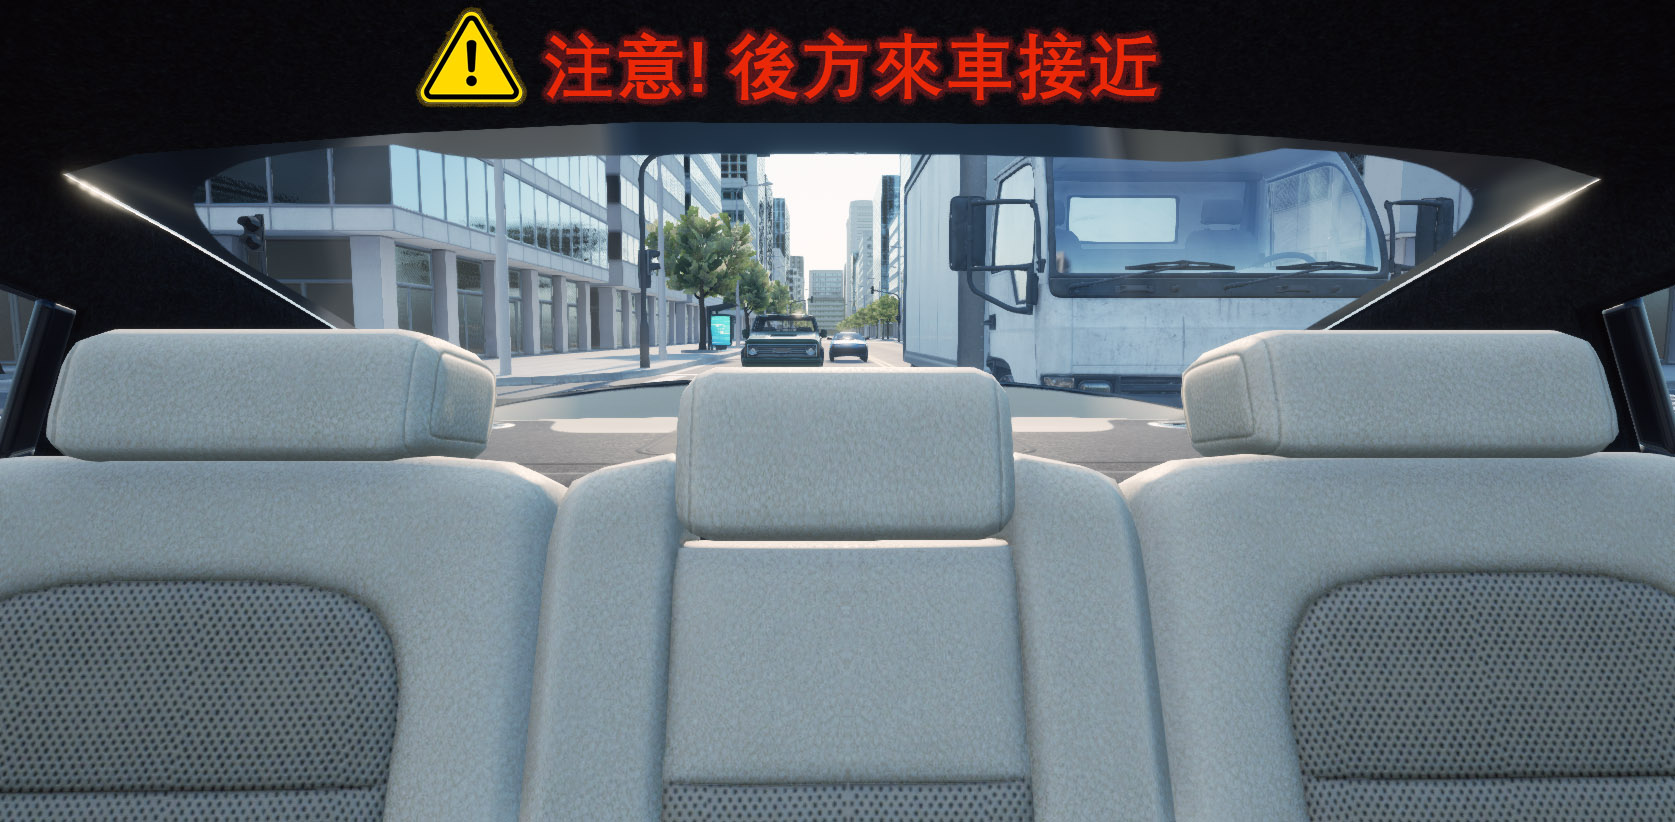 VR 交通安全駕駛培訓